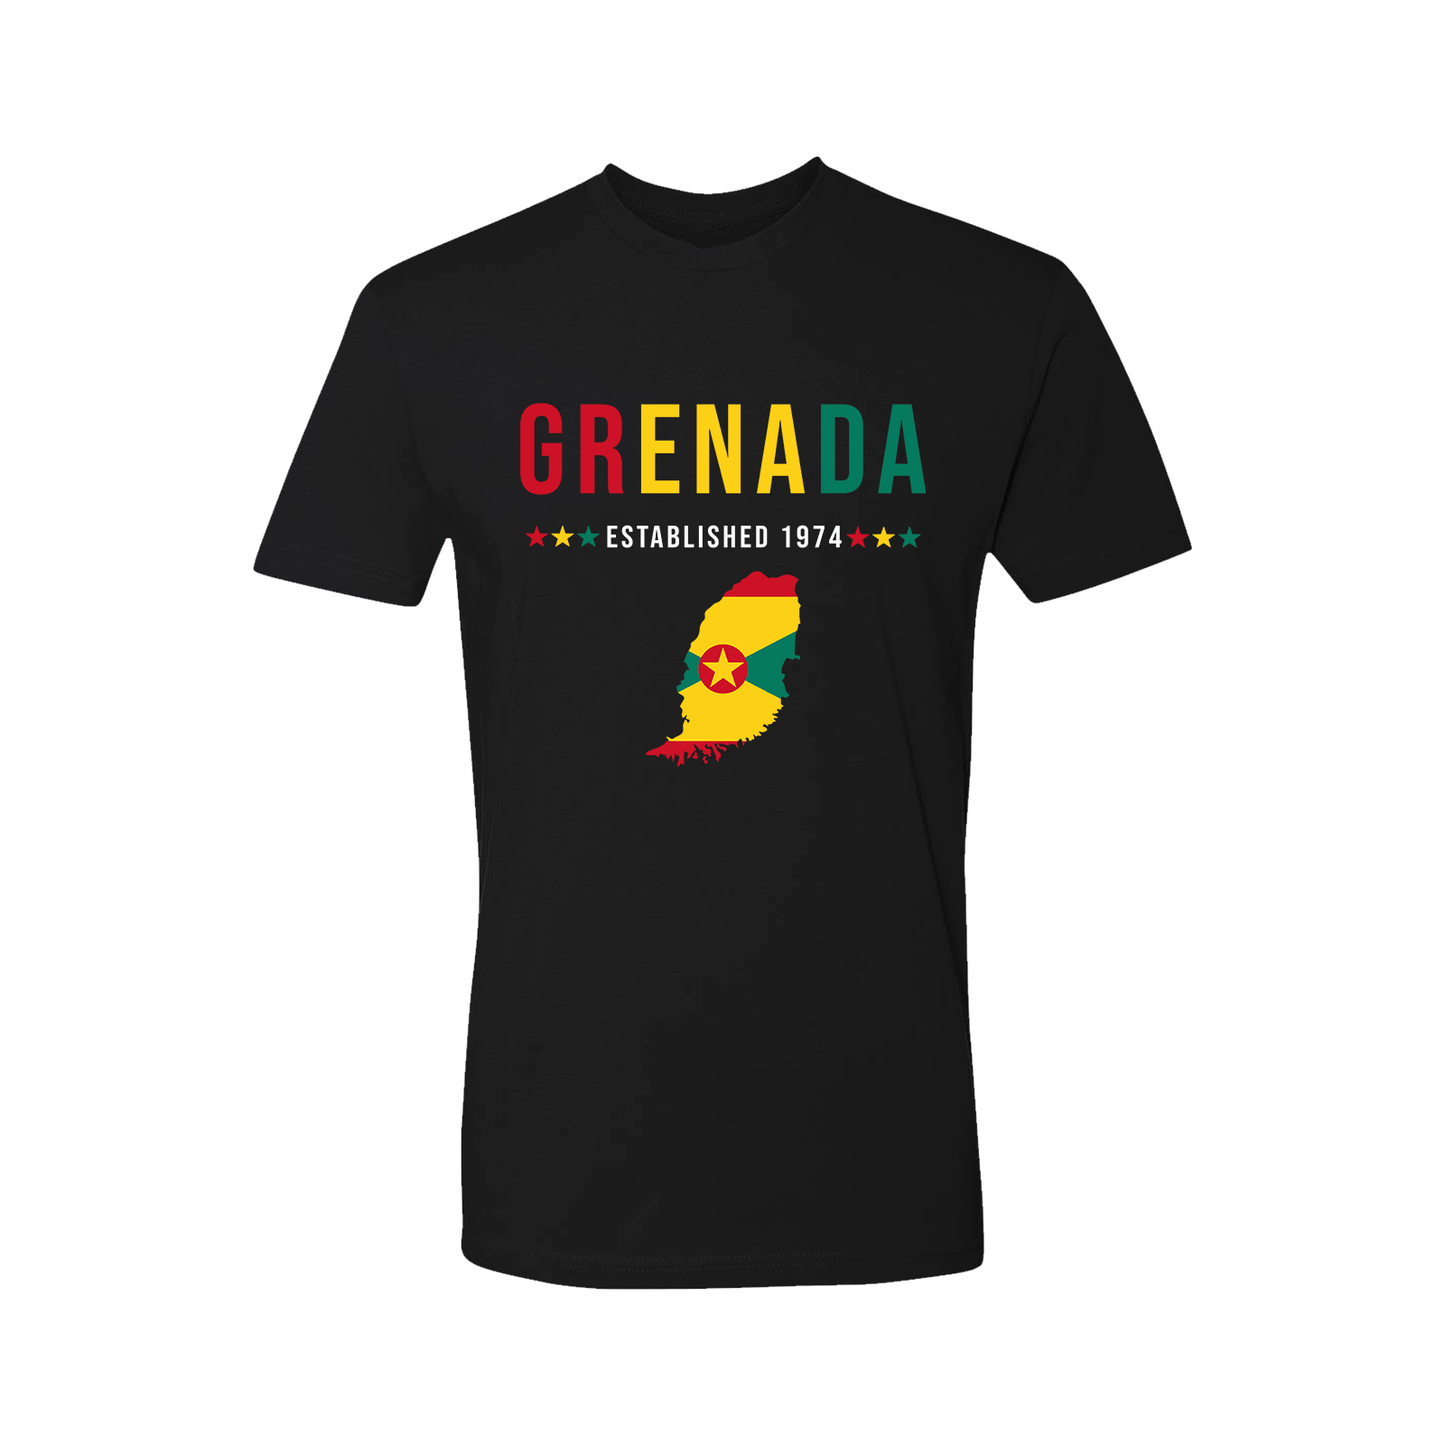 Grenada Short Sleeve Shirt - Adult